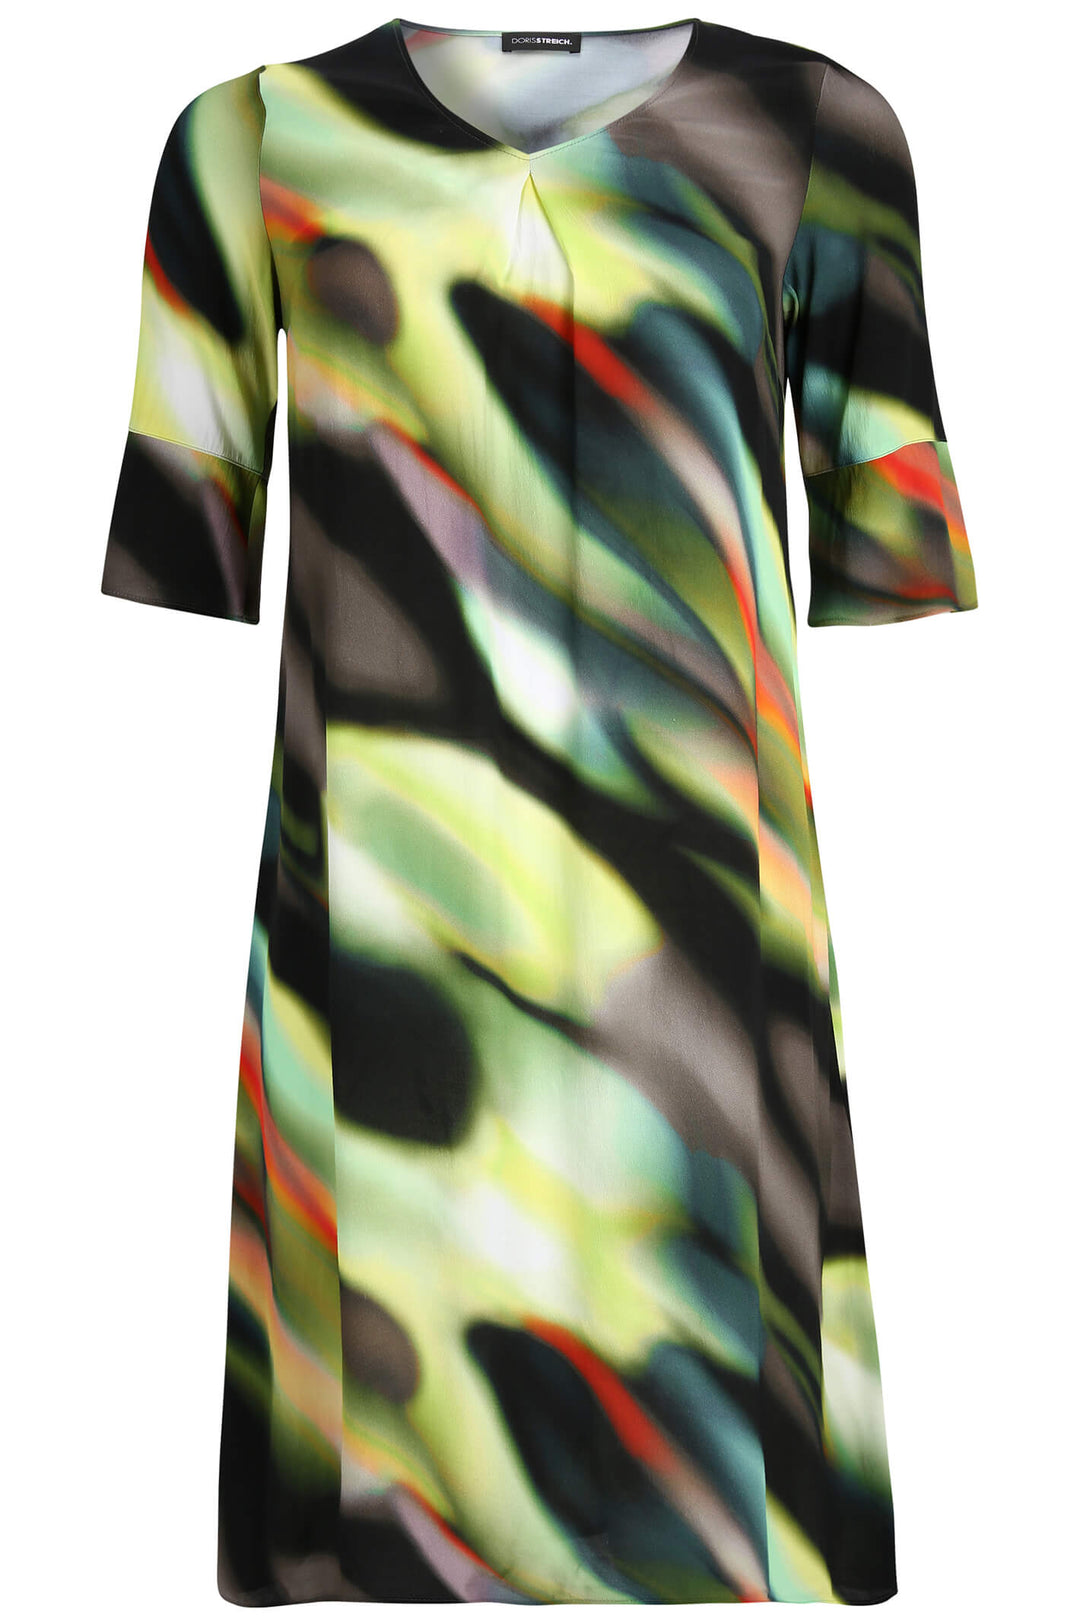 Doris Streich 637 676 Green Print Dress With Sleeves - Shirley Allum Boutique